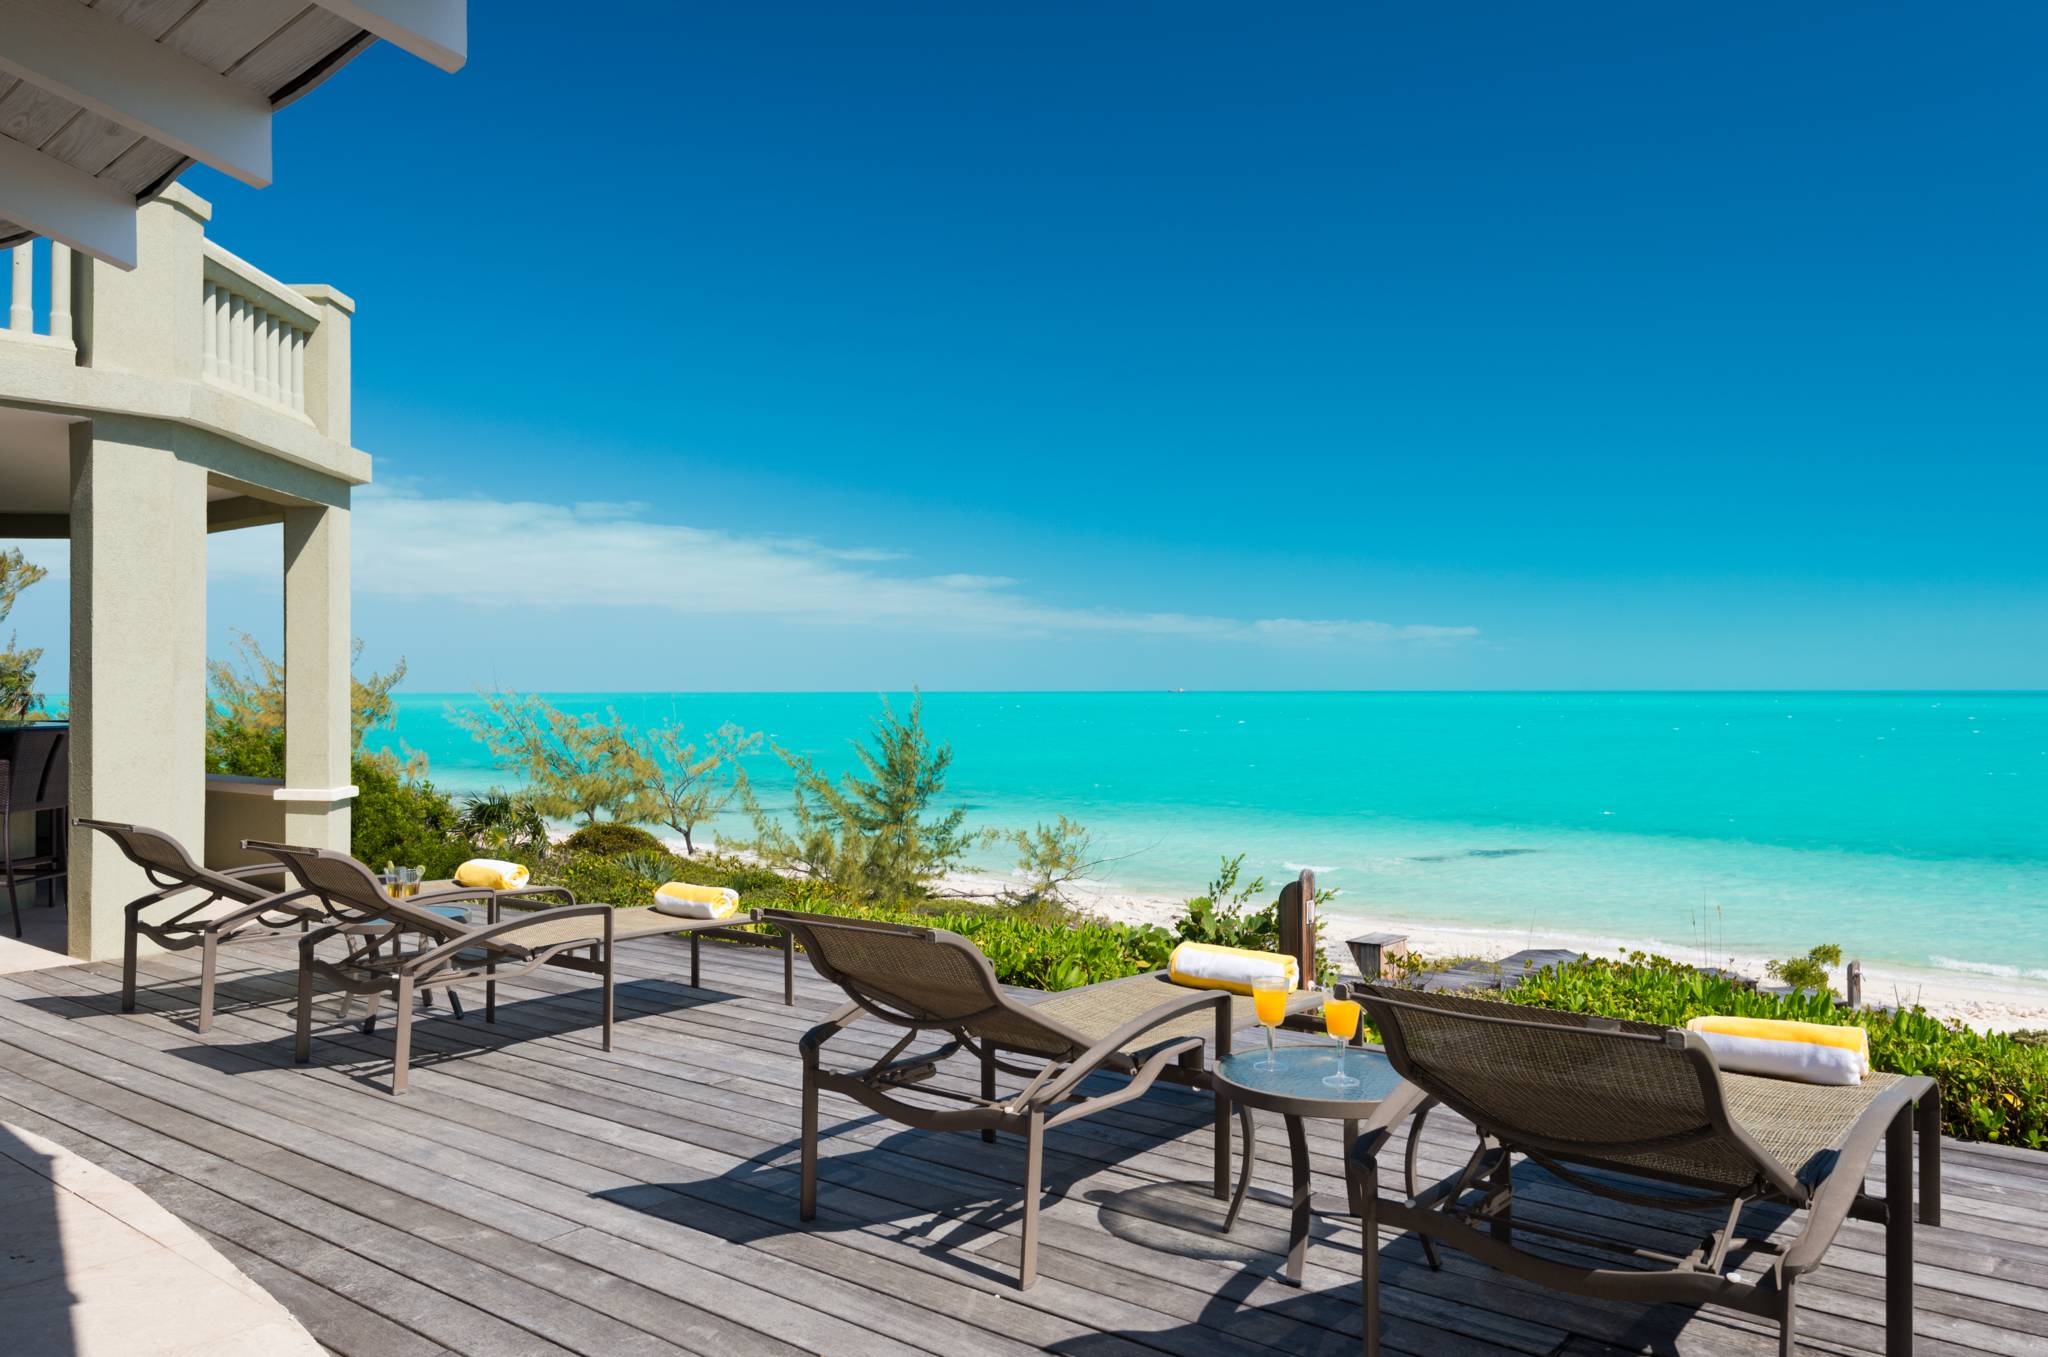 Calms seas and quiet beach define Casa Varnishkes luxury vacation villa